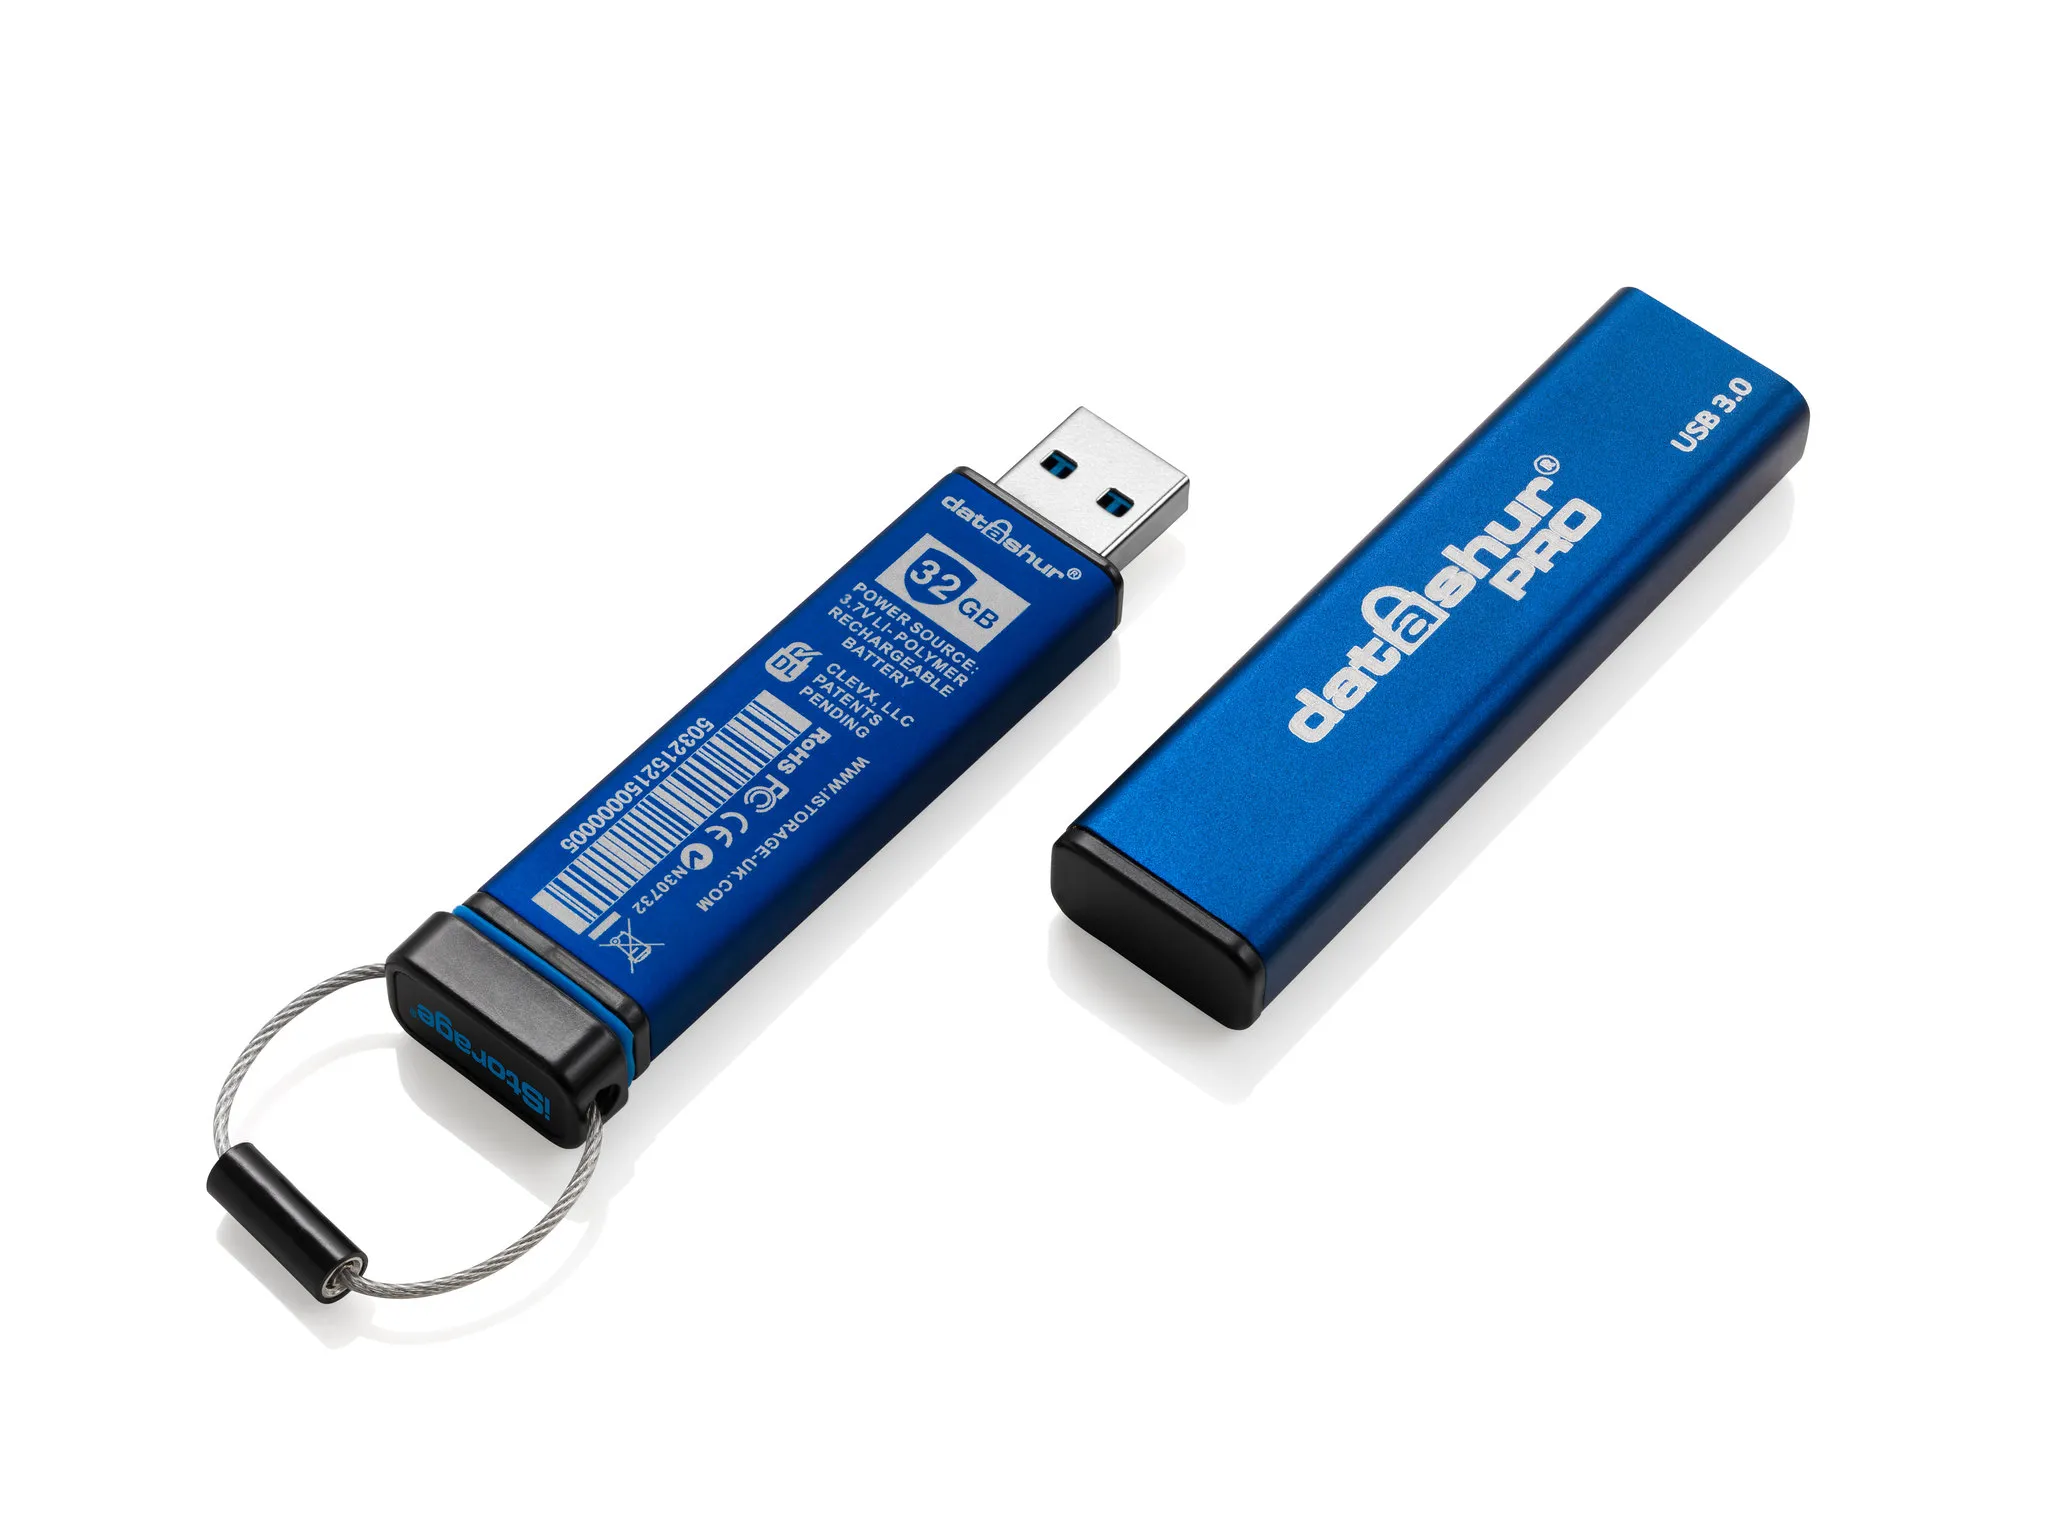 Vente iStorage datAshur Pro USB3 256-bit 8GB iStorage au meilleur prix - visuel 8